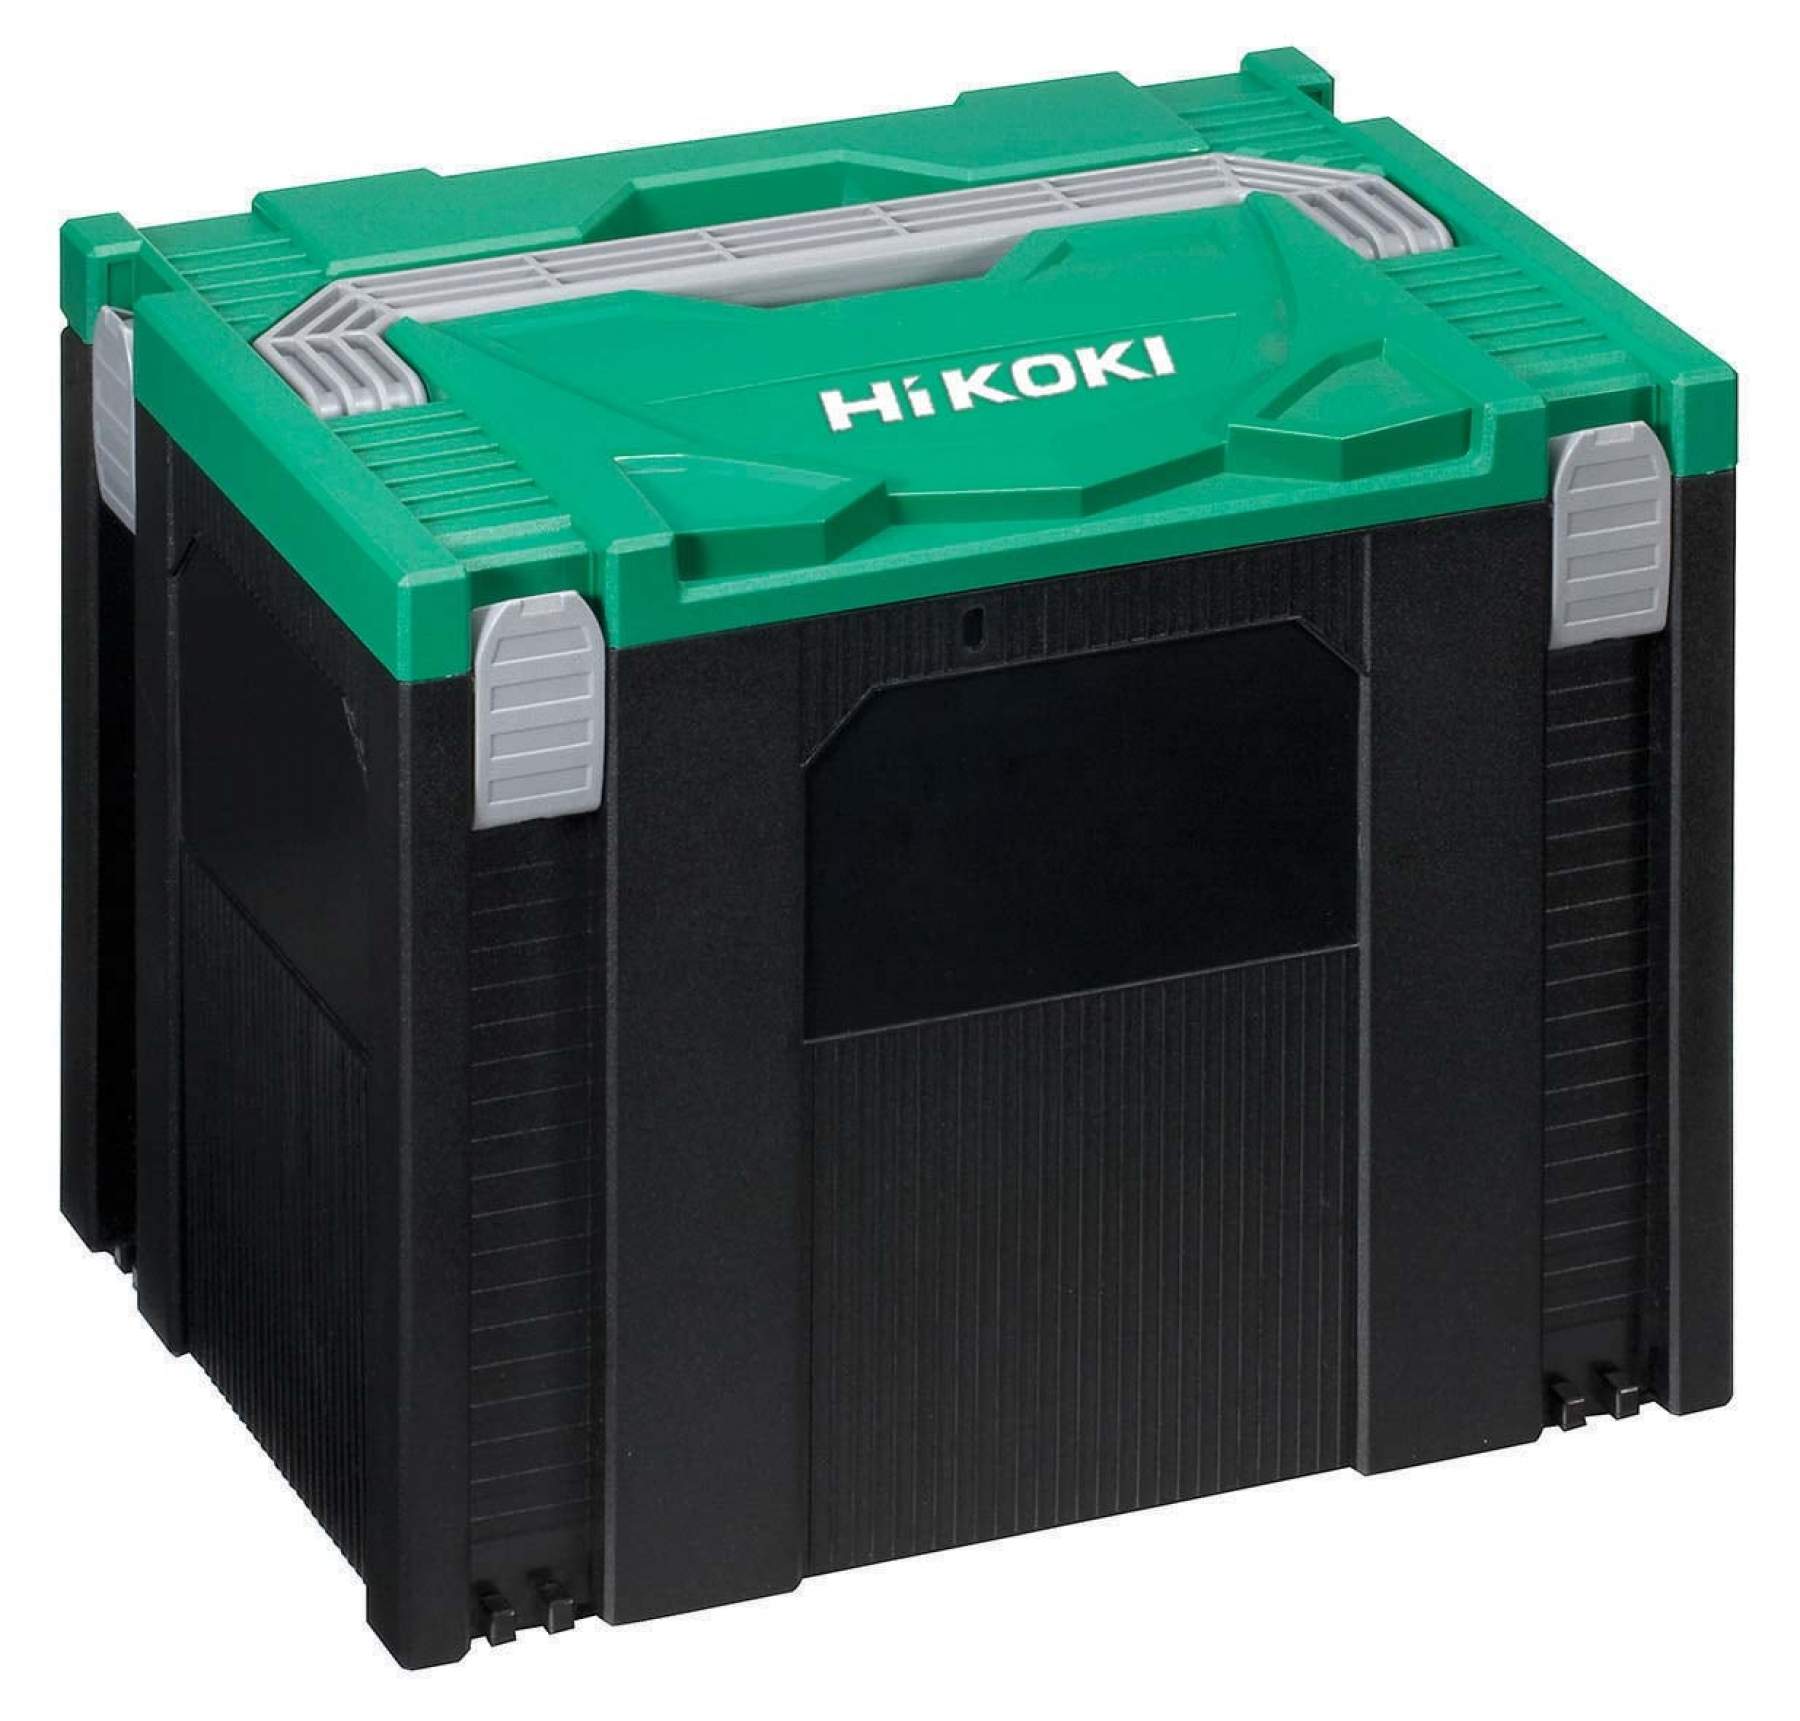 Hitachi Stackable Case System